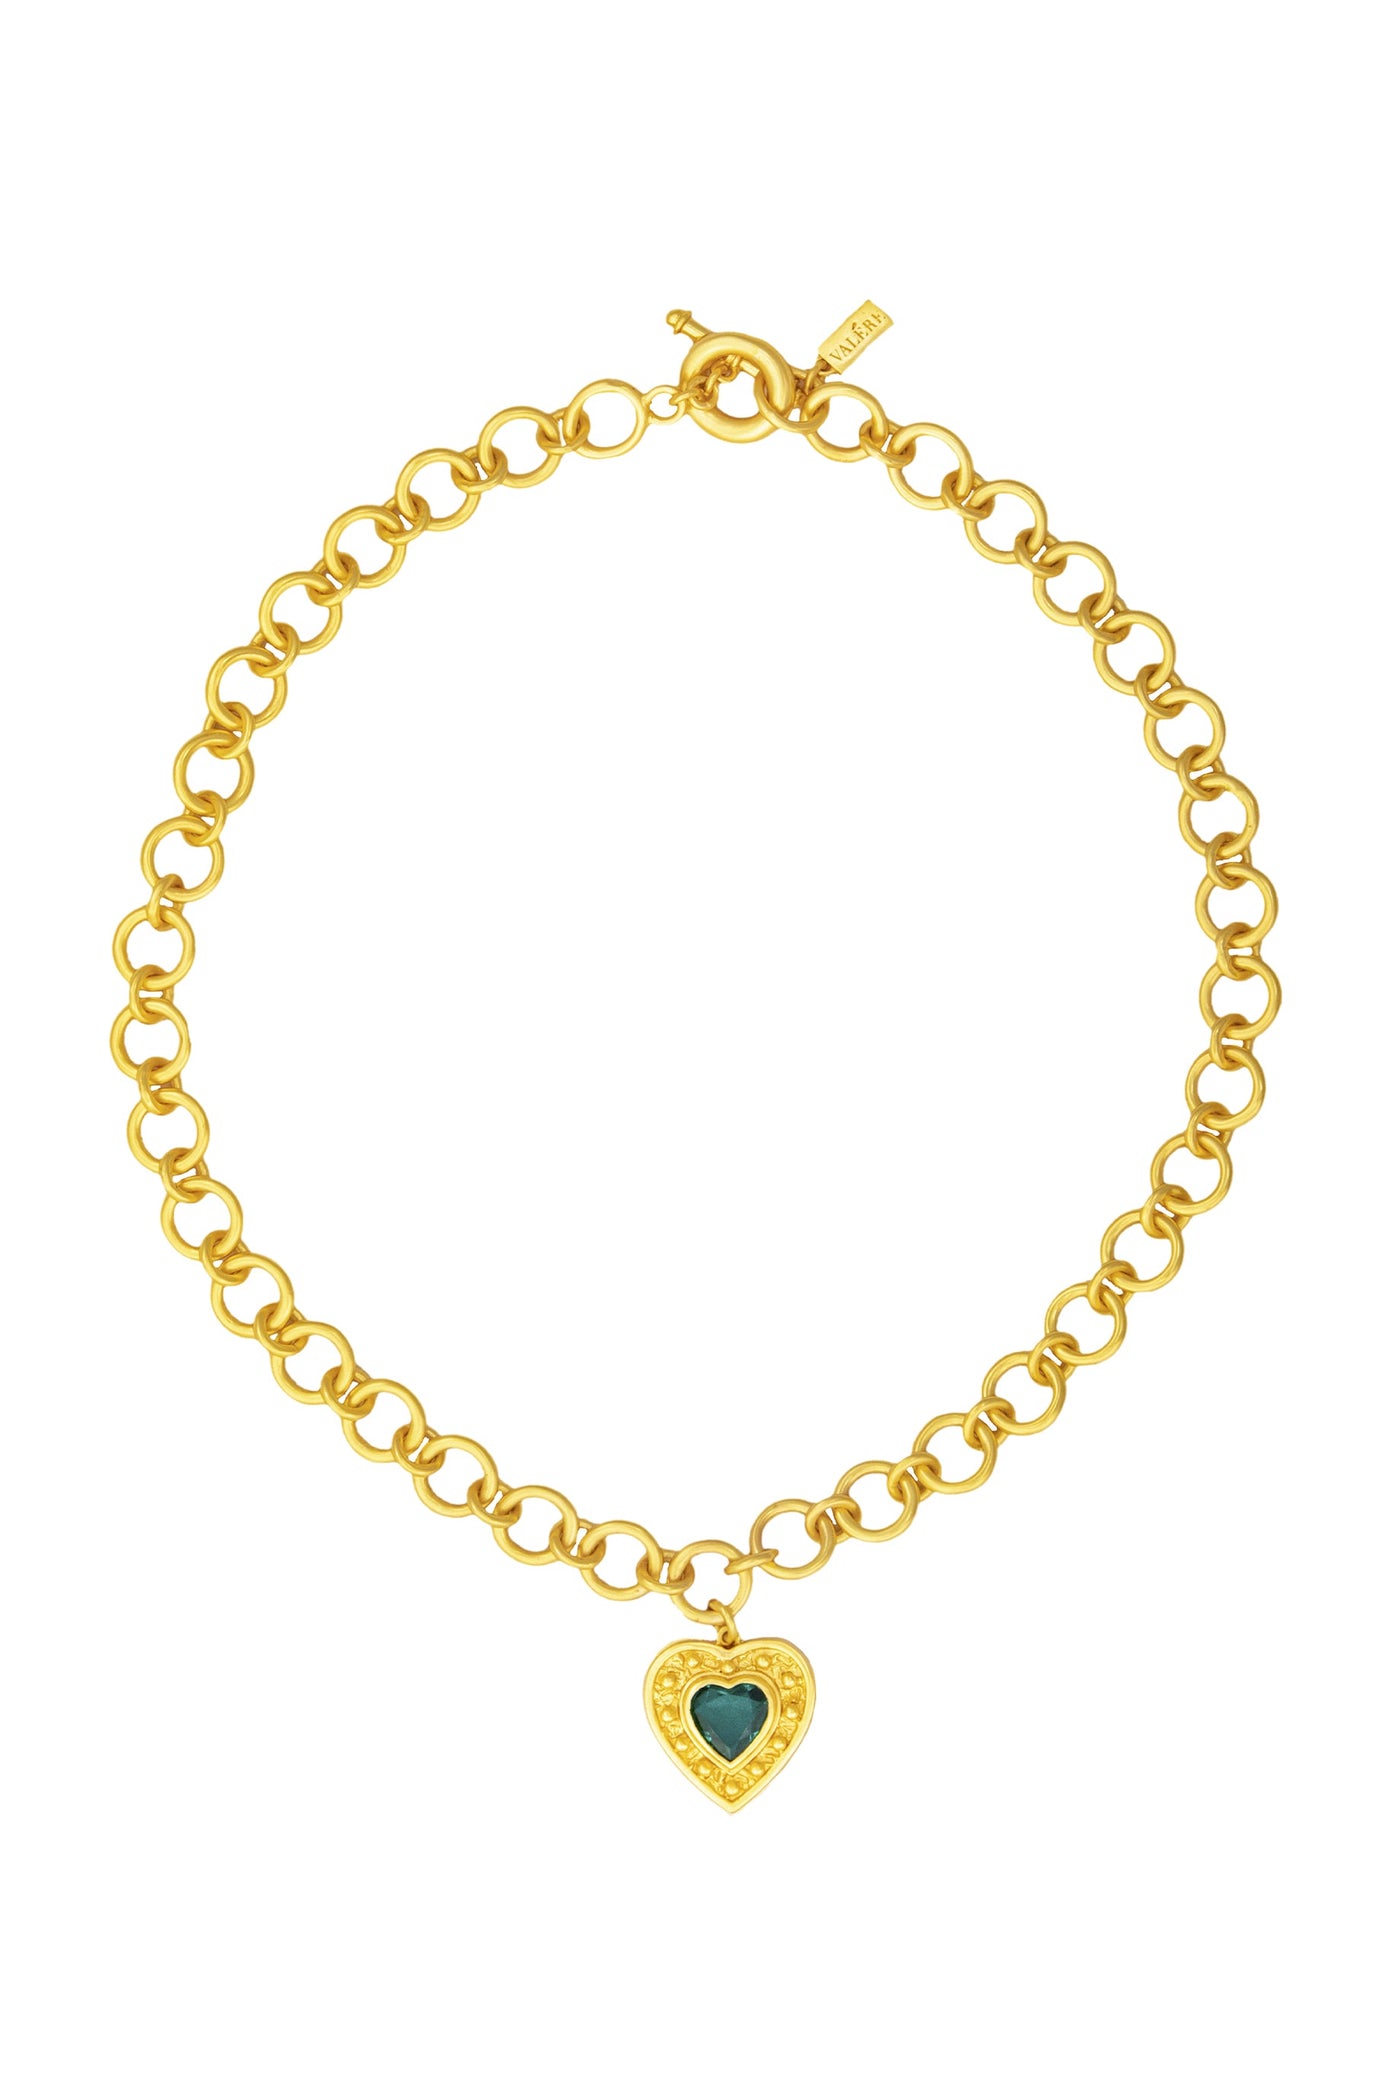 Valere Hearts Necklace - Emerald